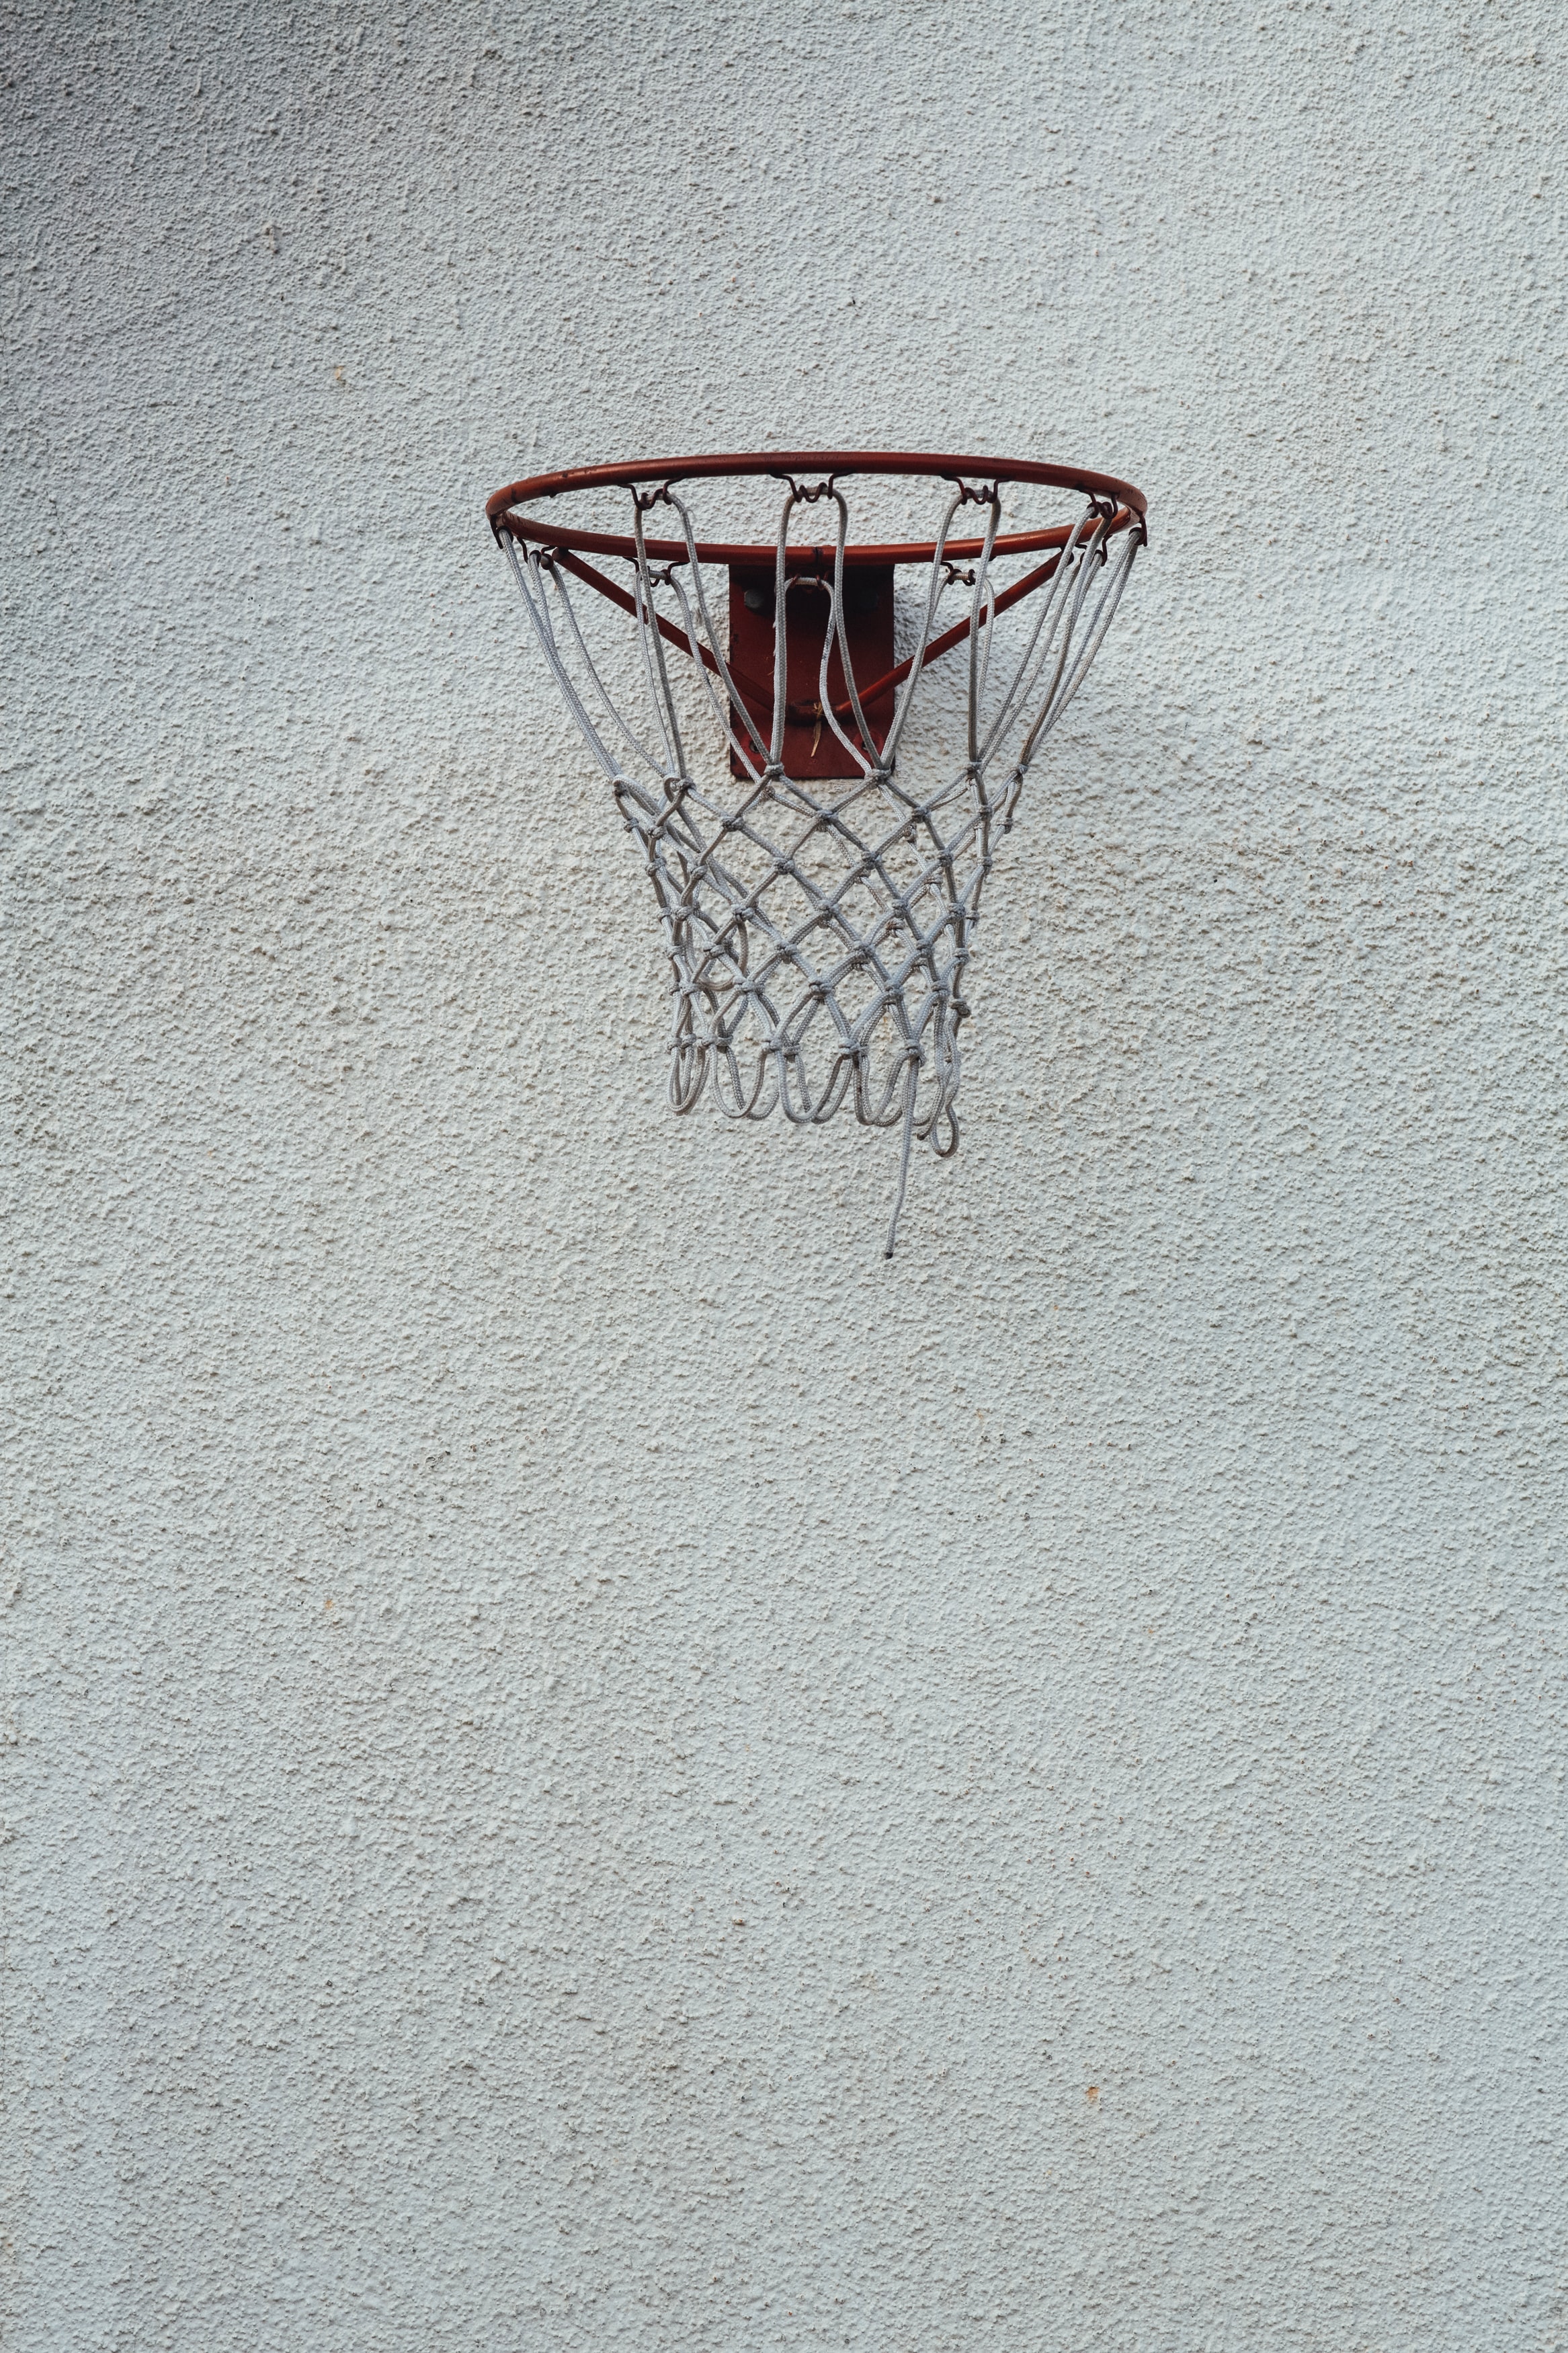 basketball, basketball hoop, basketball ring, miscellanea, miscellaneous, grid, wall HD wallpaper